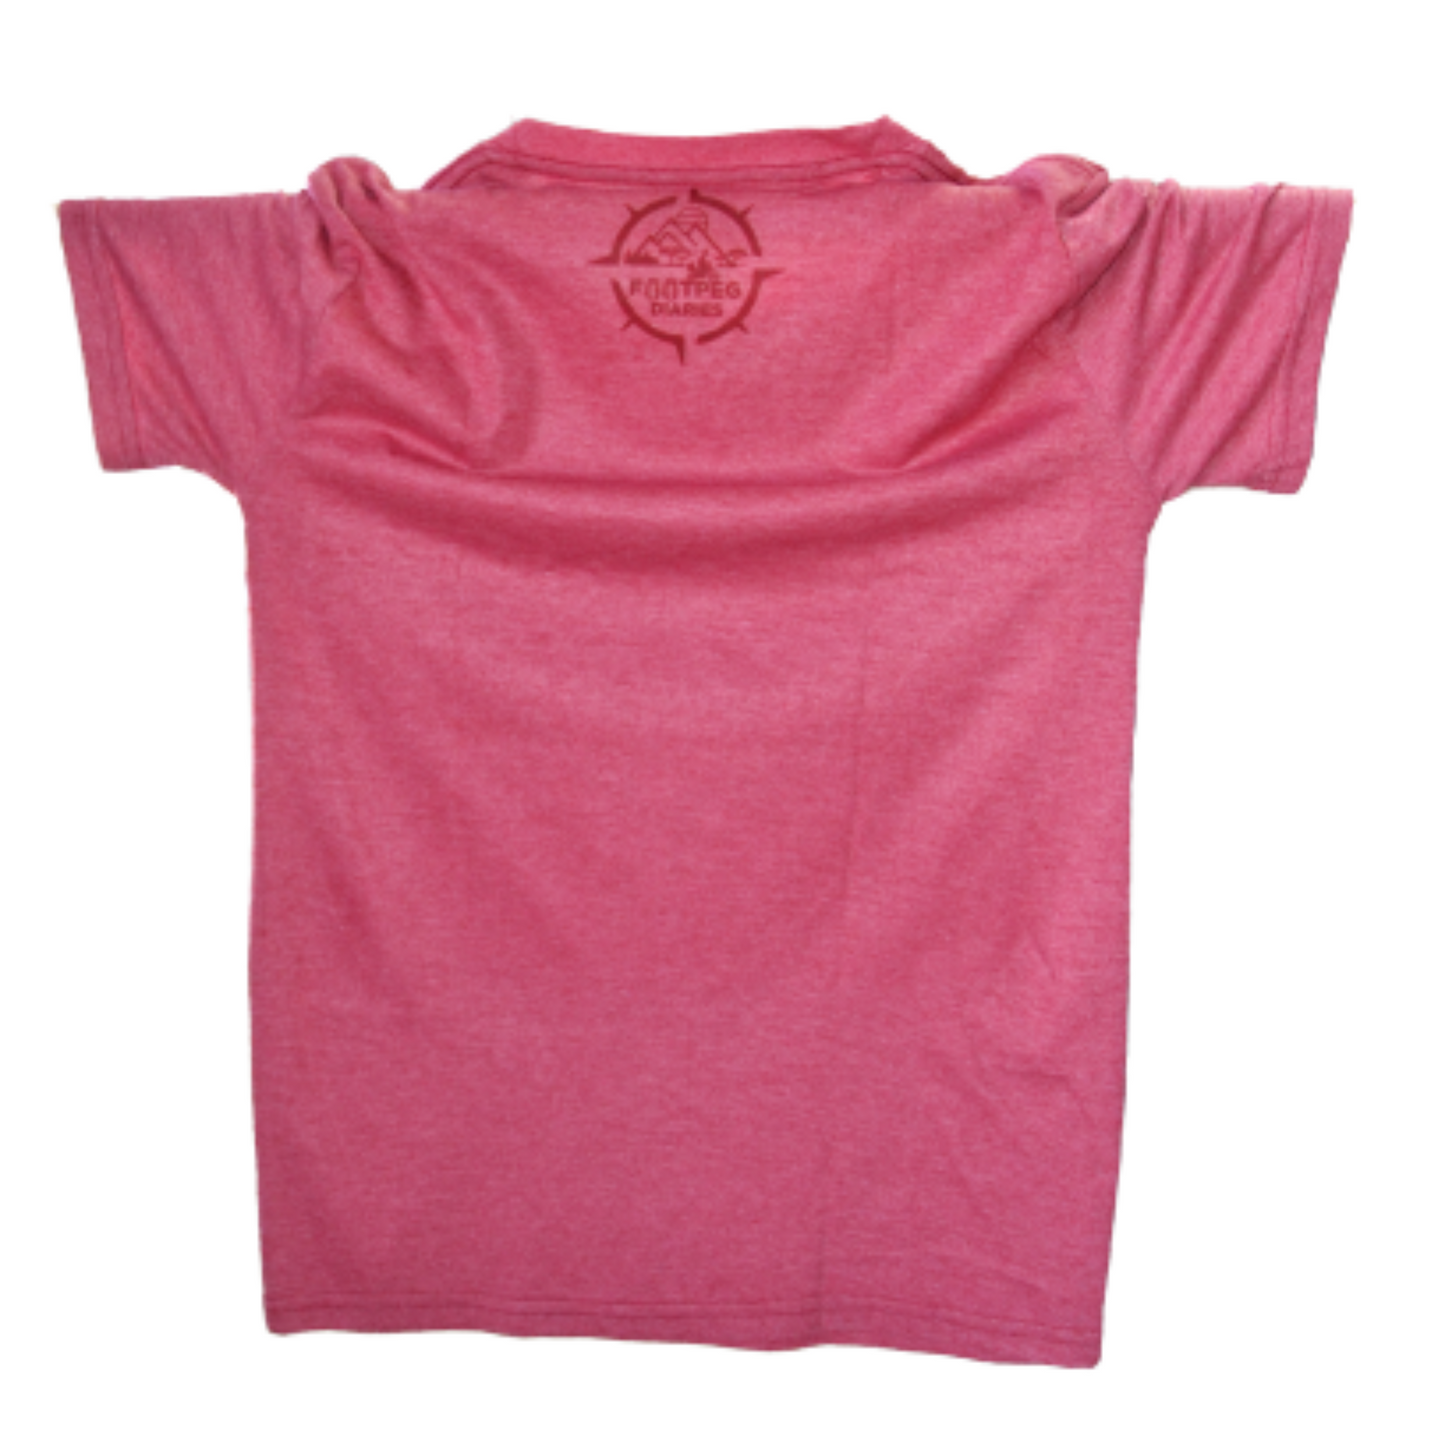 Footpeg Diaries T-shirt  - Red/Pink